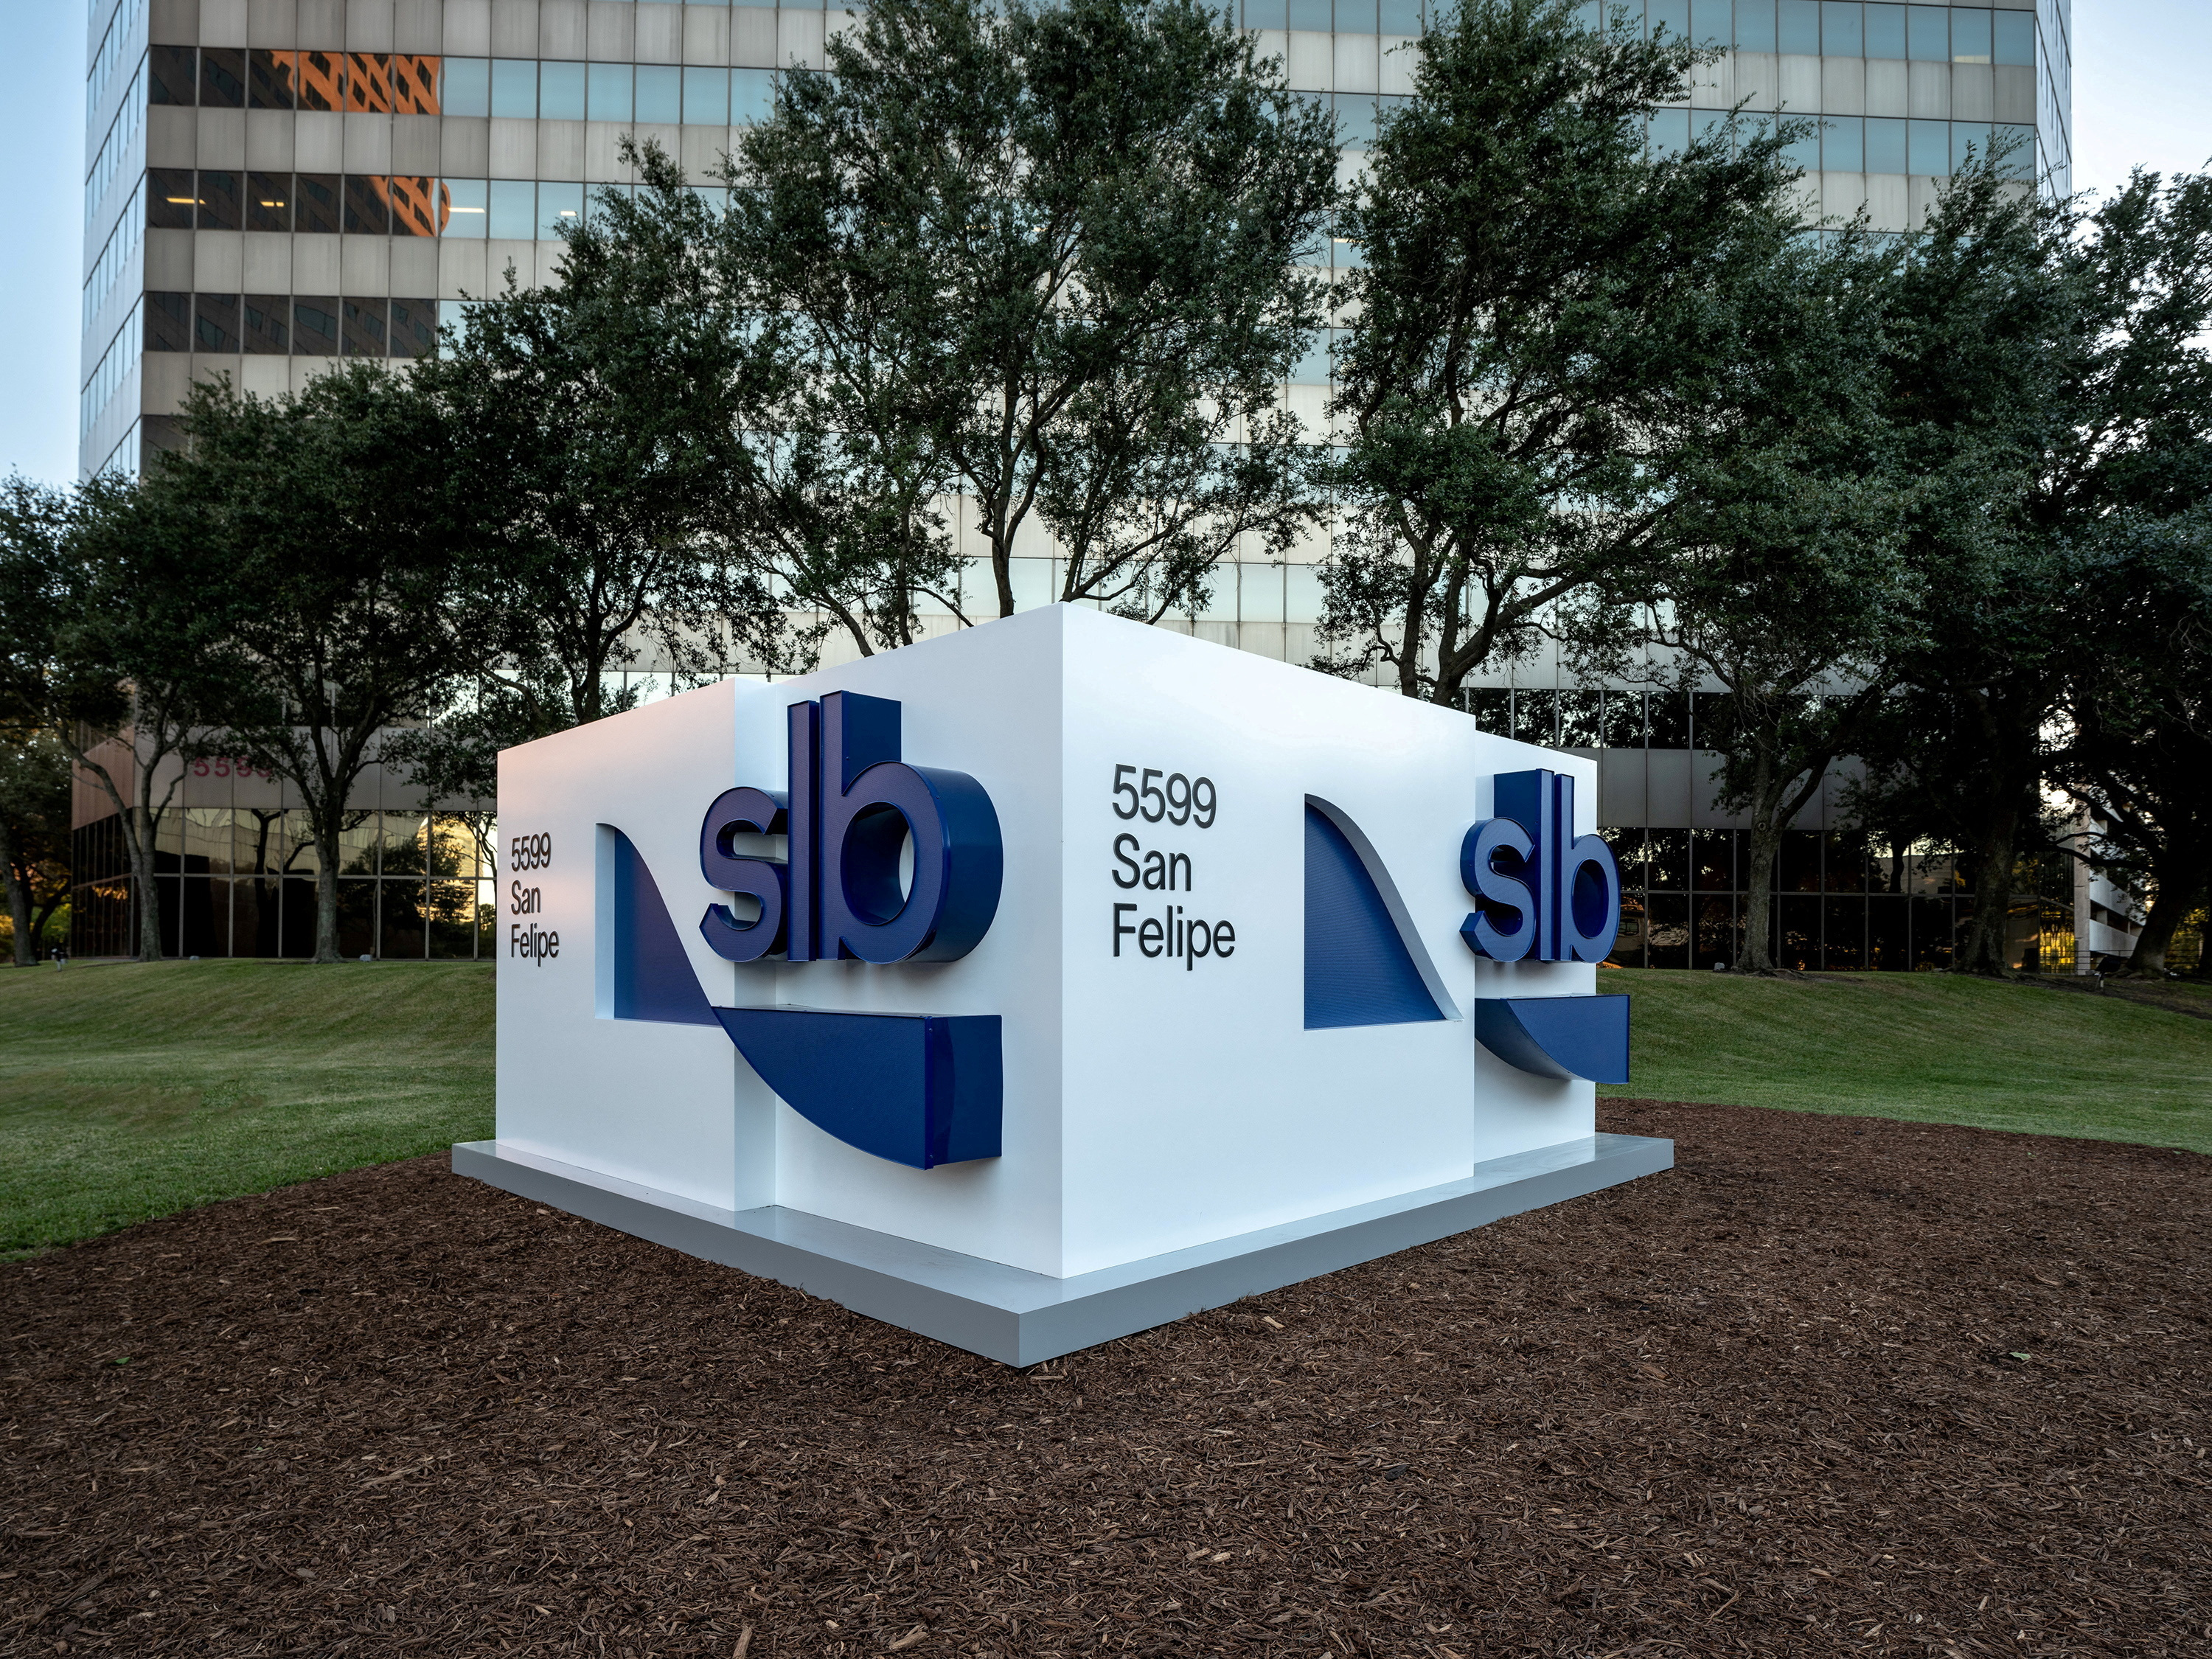 New SLB logo seen in Houston, Texas